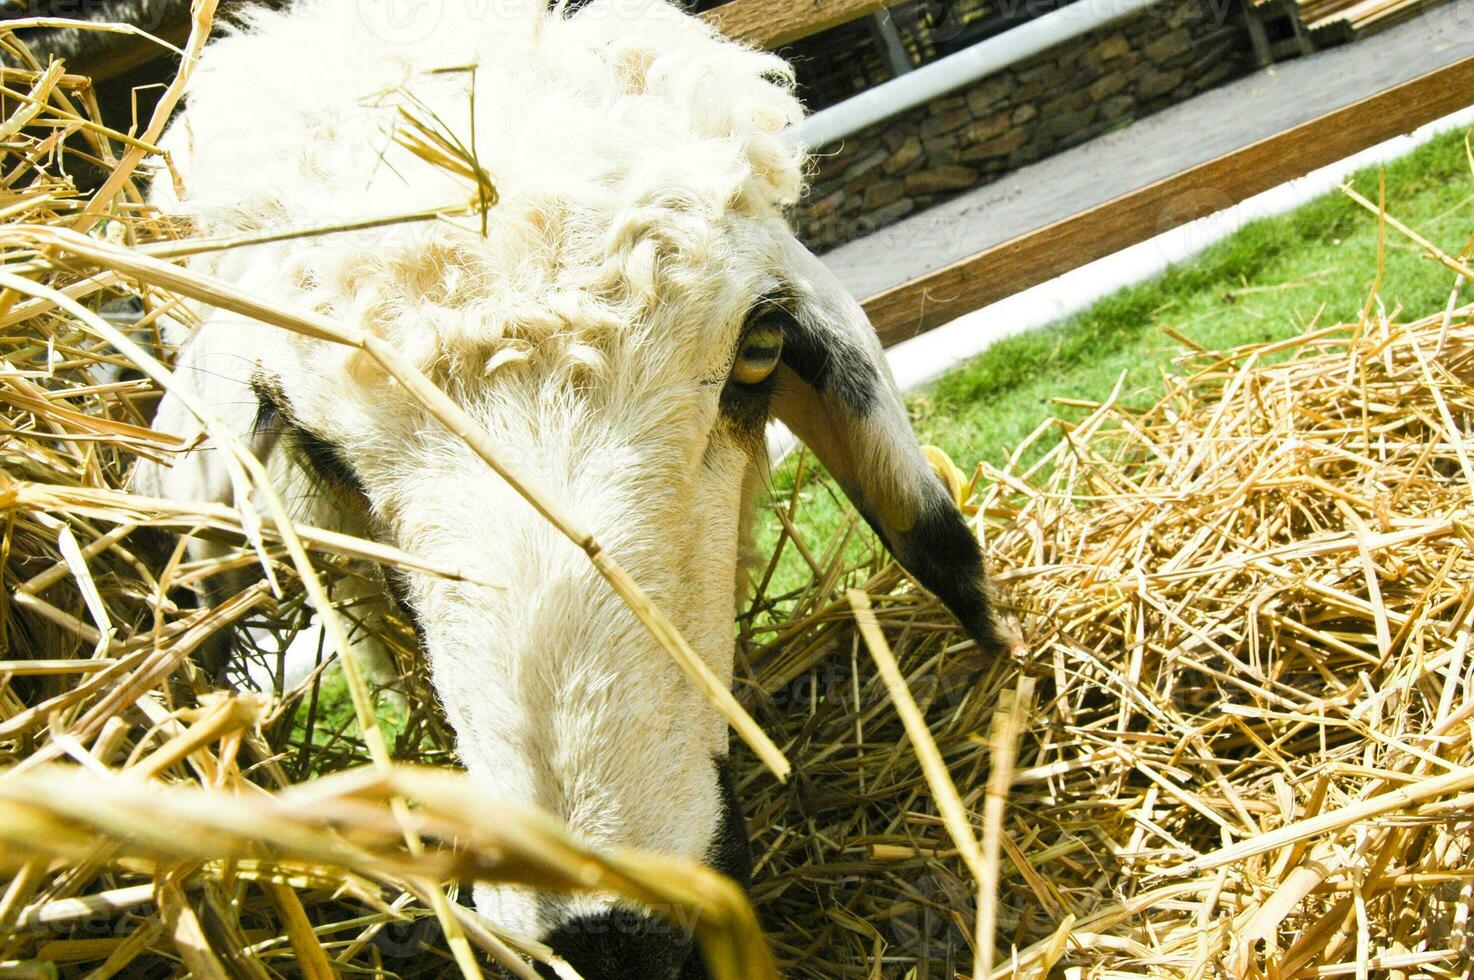 oveja comiendo Paja en el granja foto